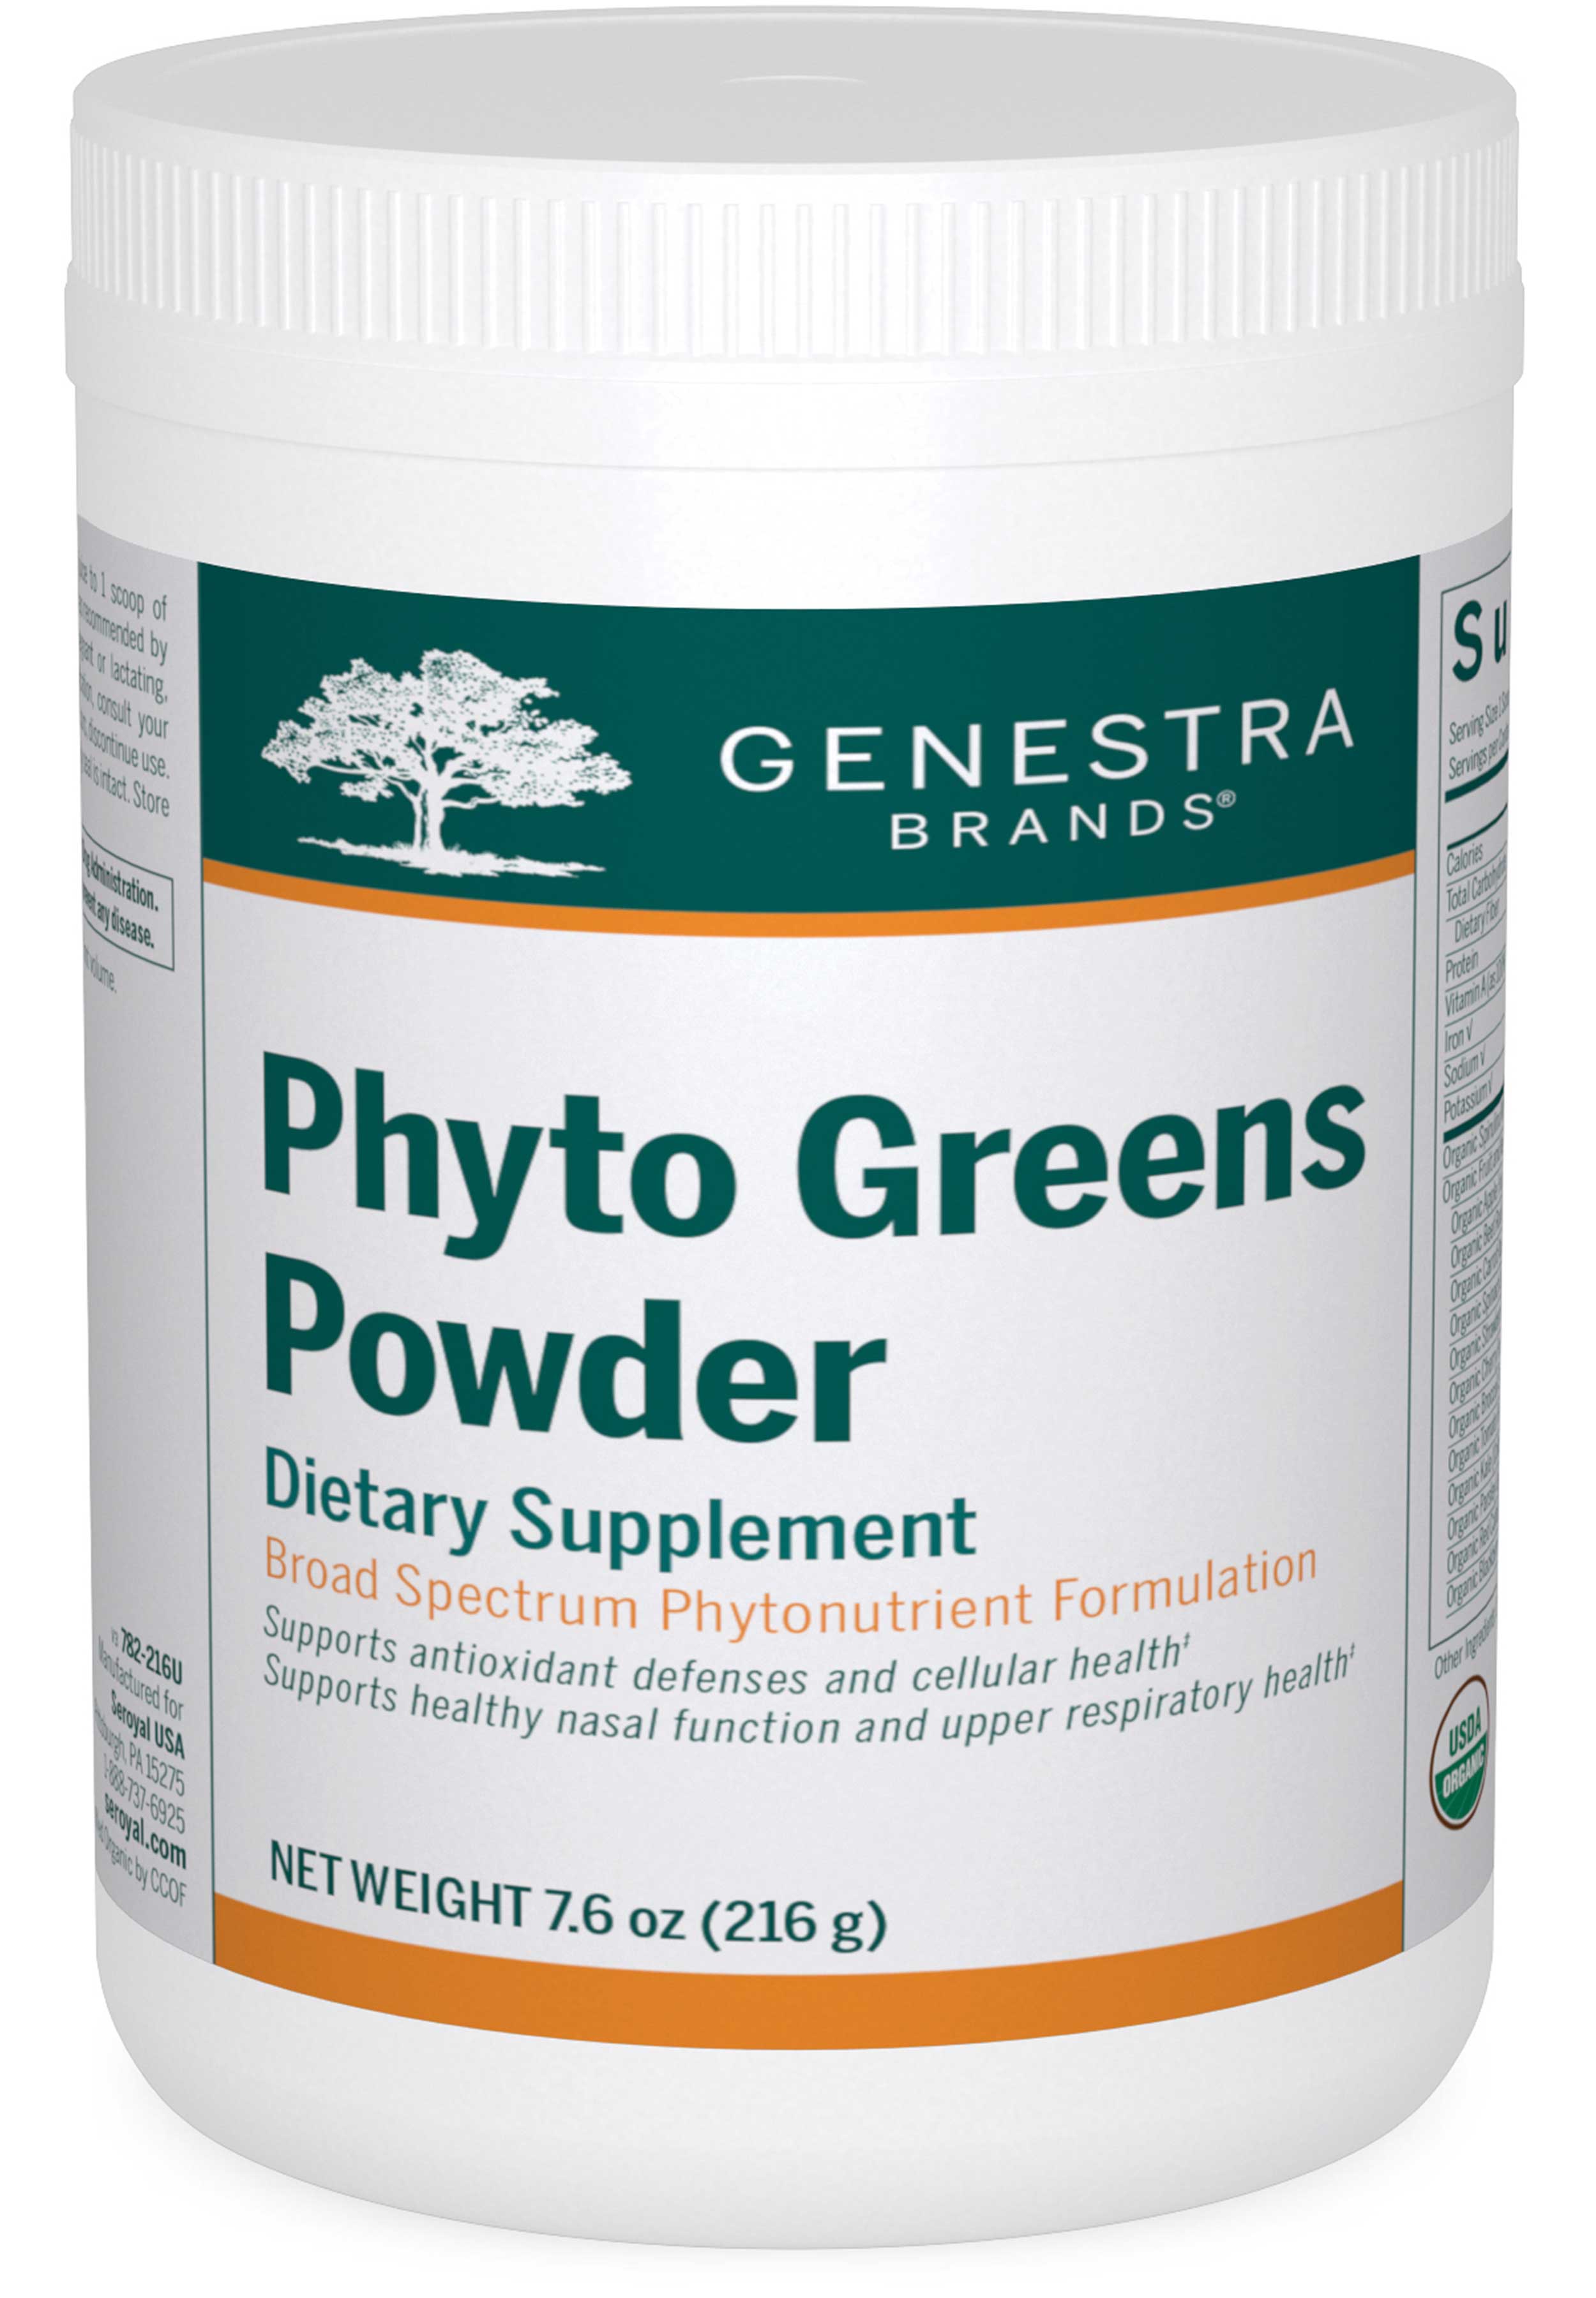 Genestra Brands Phyto Greens